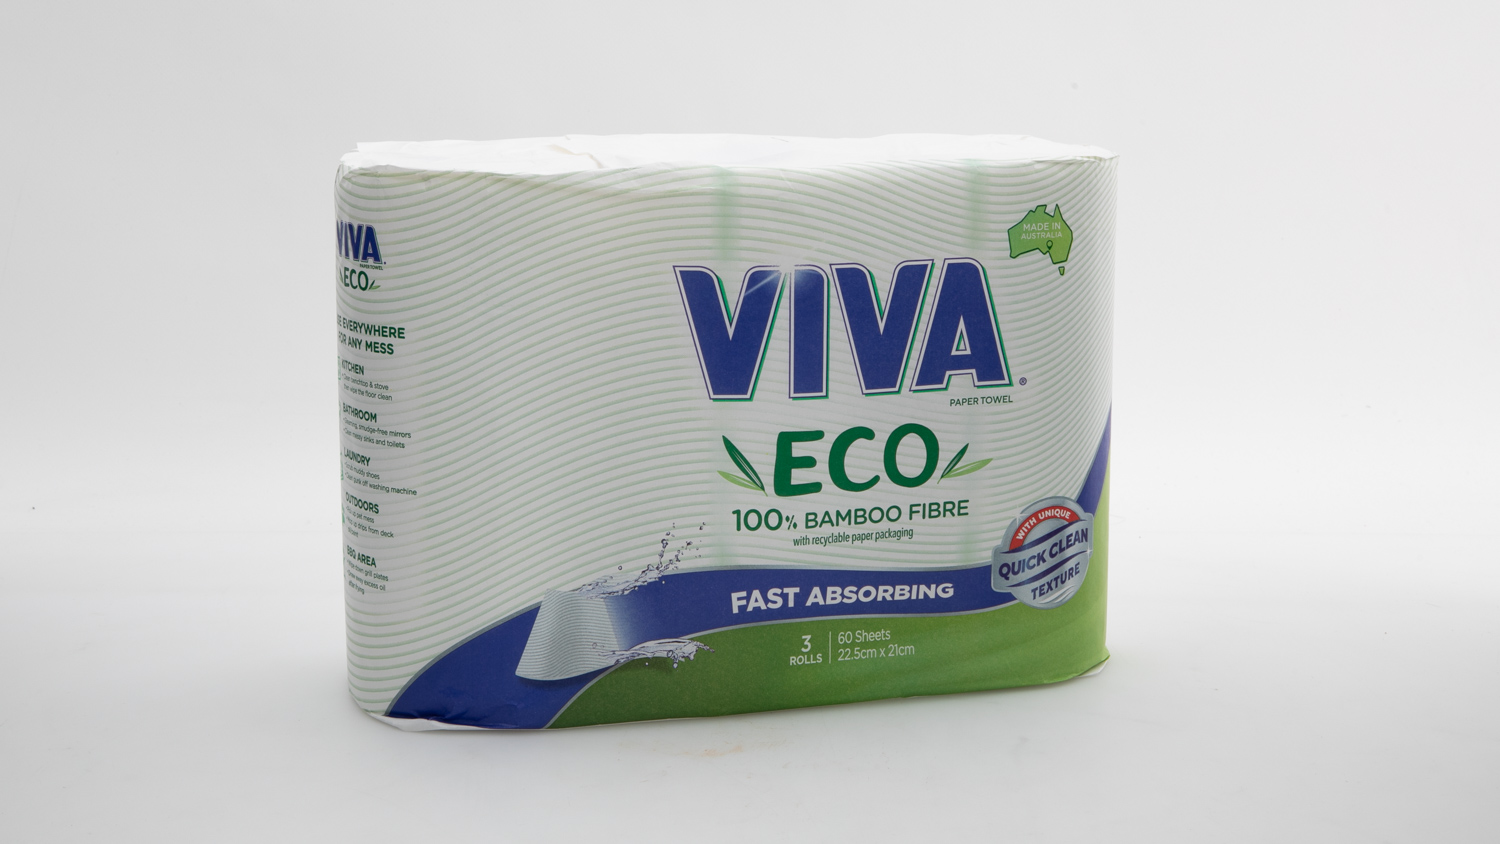 Viva Eco 100% Bamboo Fibre carousel image